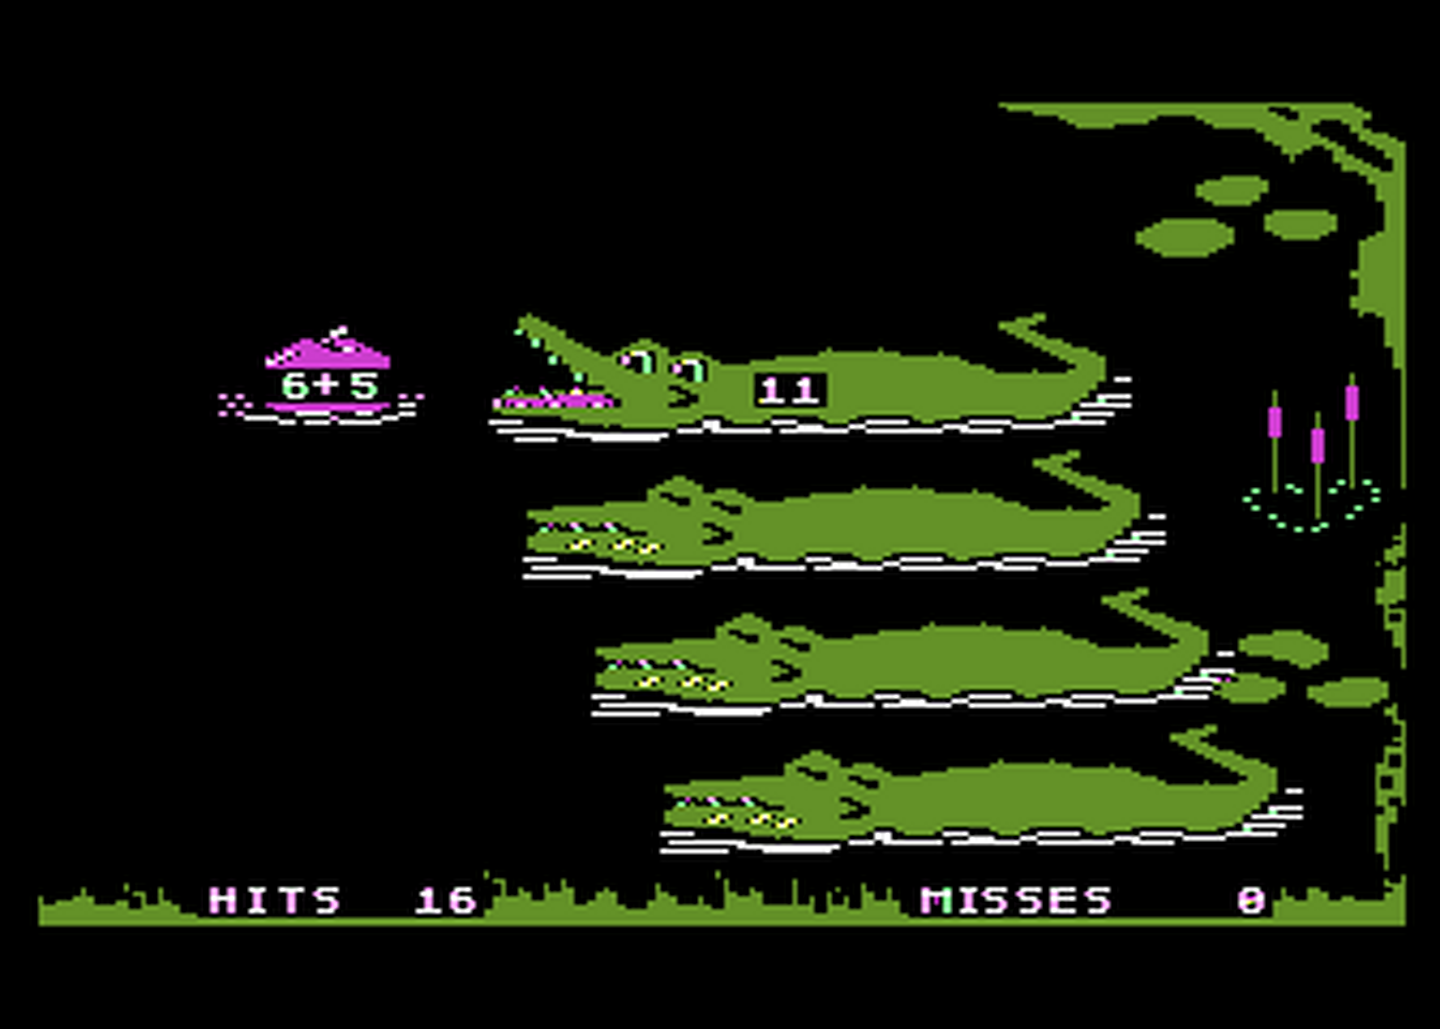 Atari GameBase Arcademic_Skill_Builders_-_Alligator_Mix DLM 1983